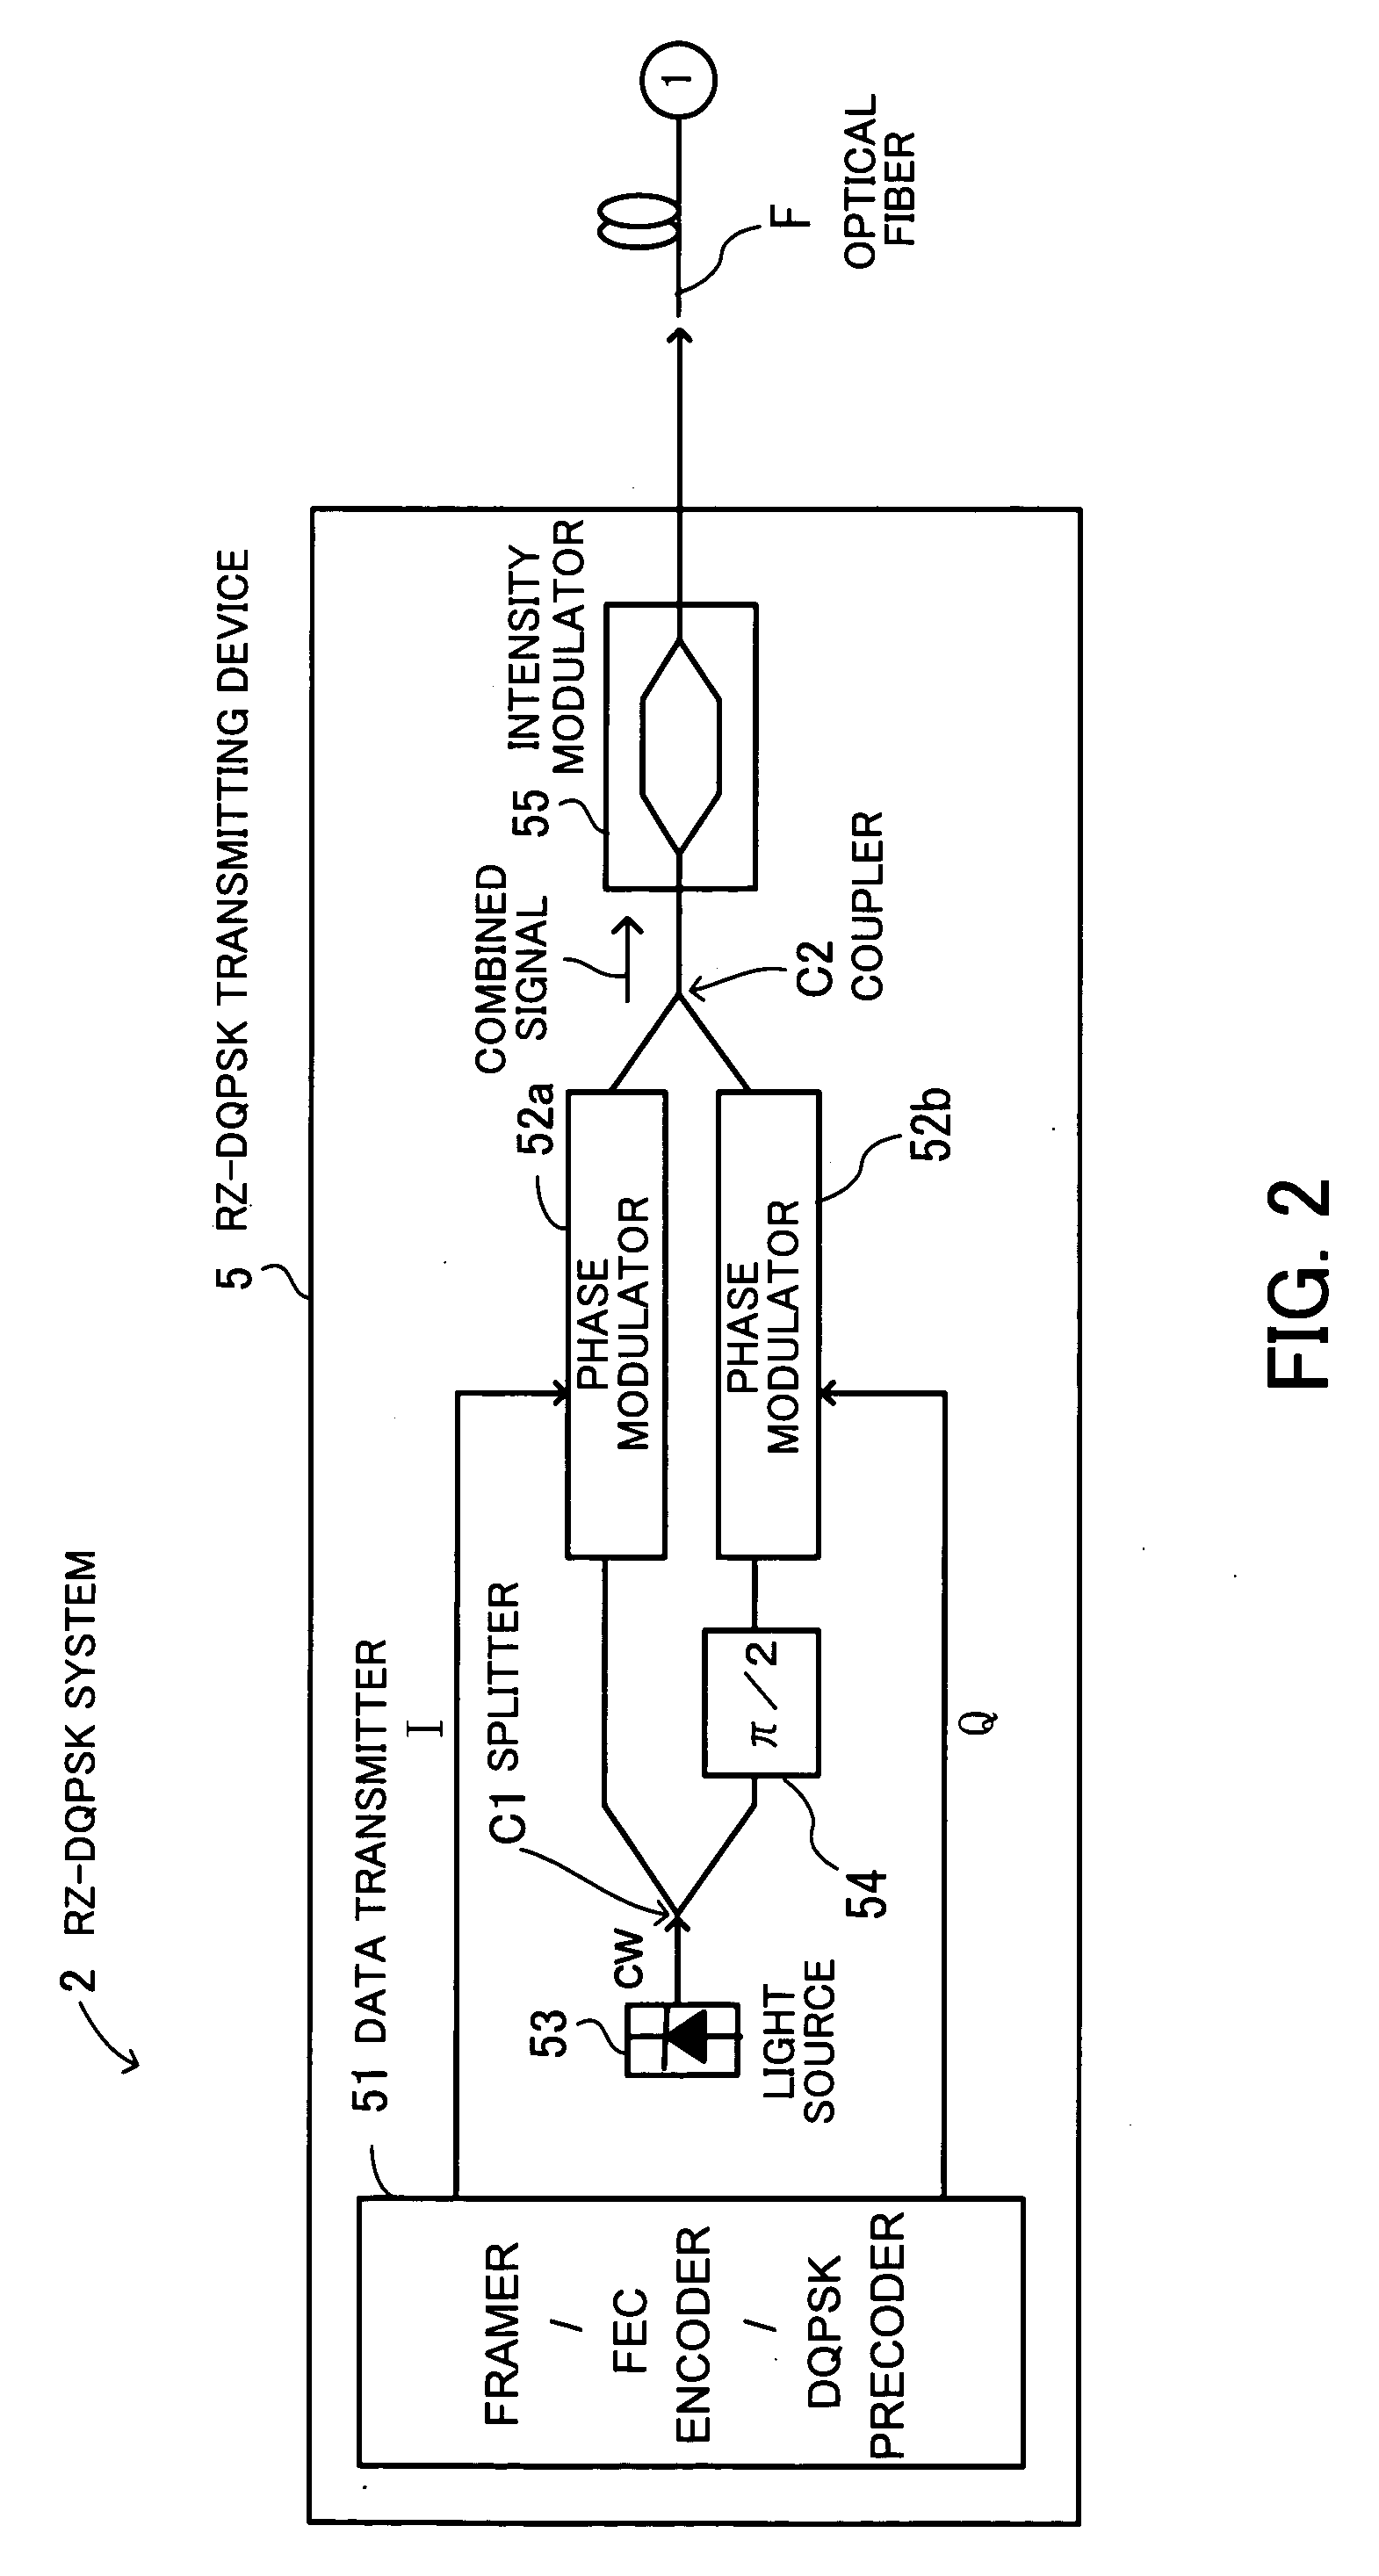 Multi-level modulation receiving device